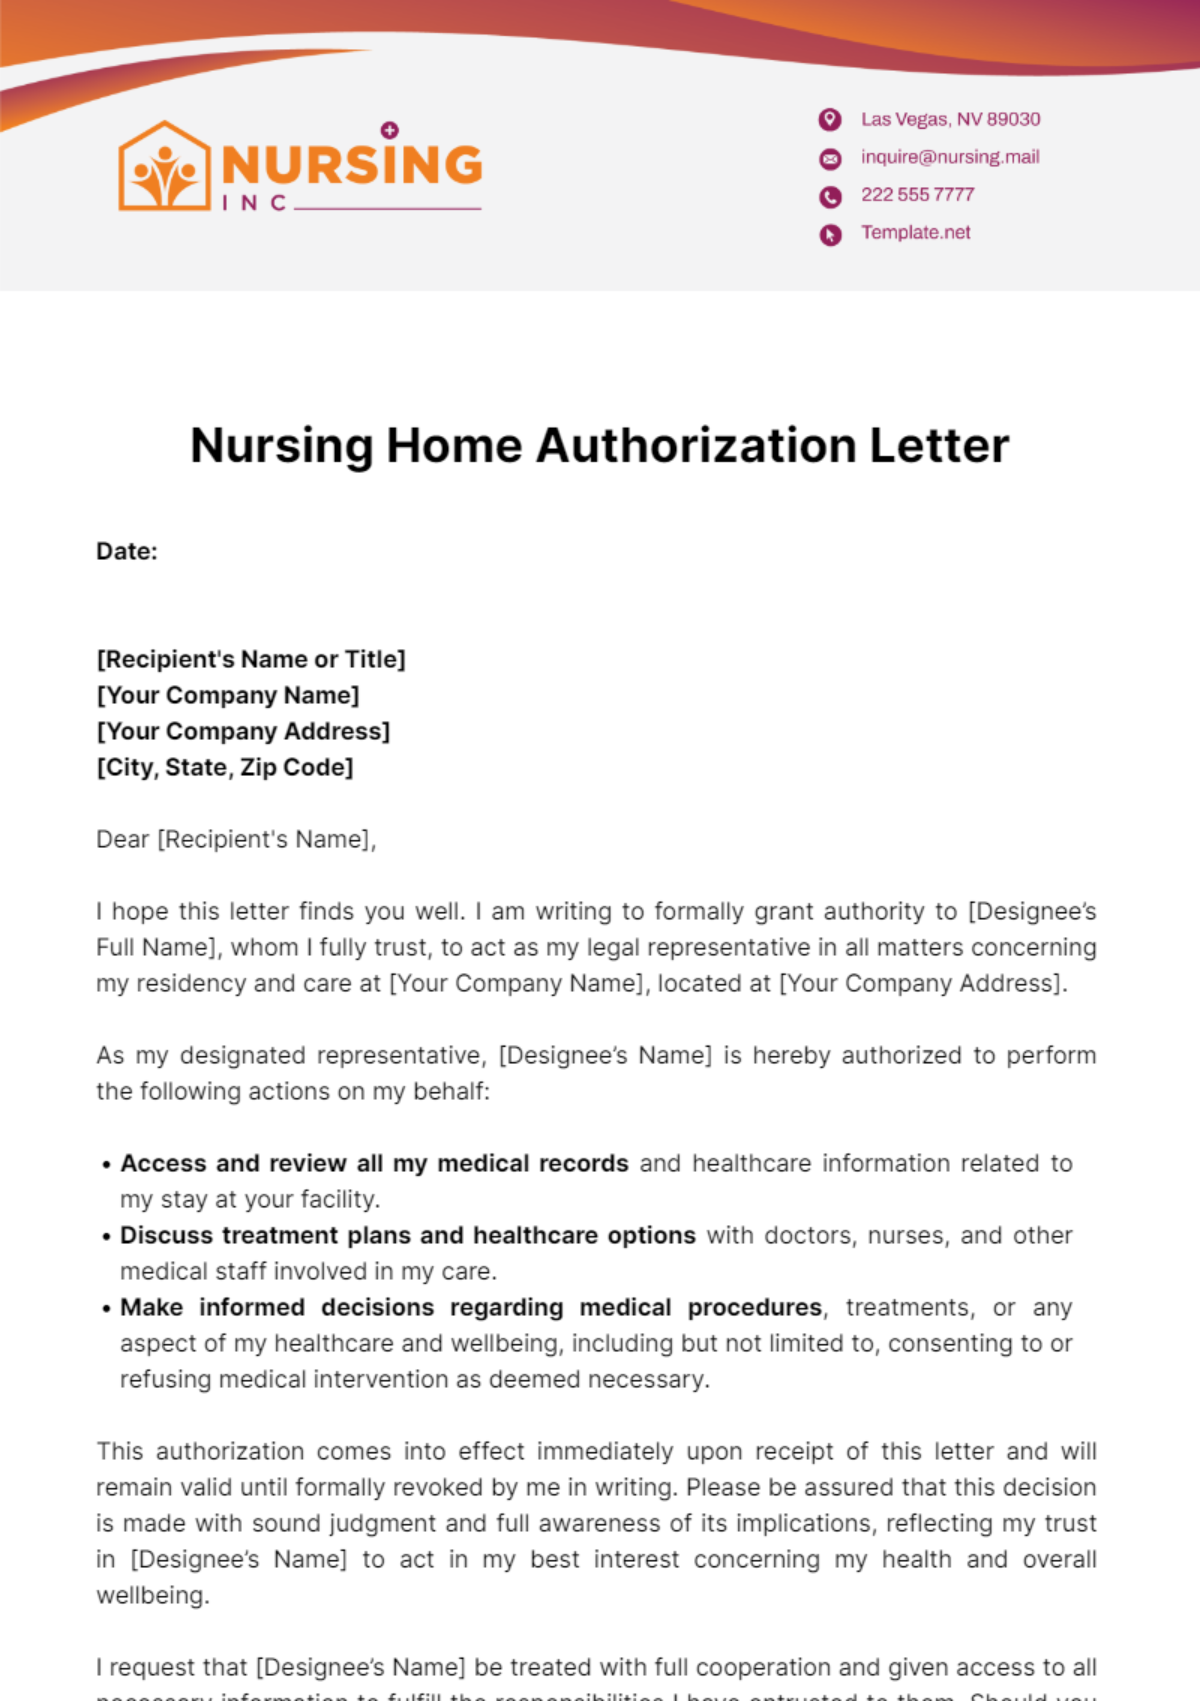 Nursing Home Authorization Letter Template